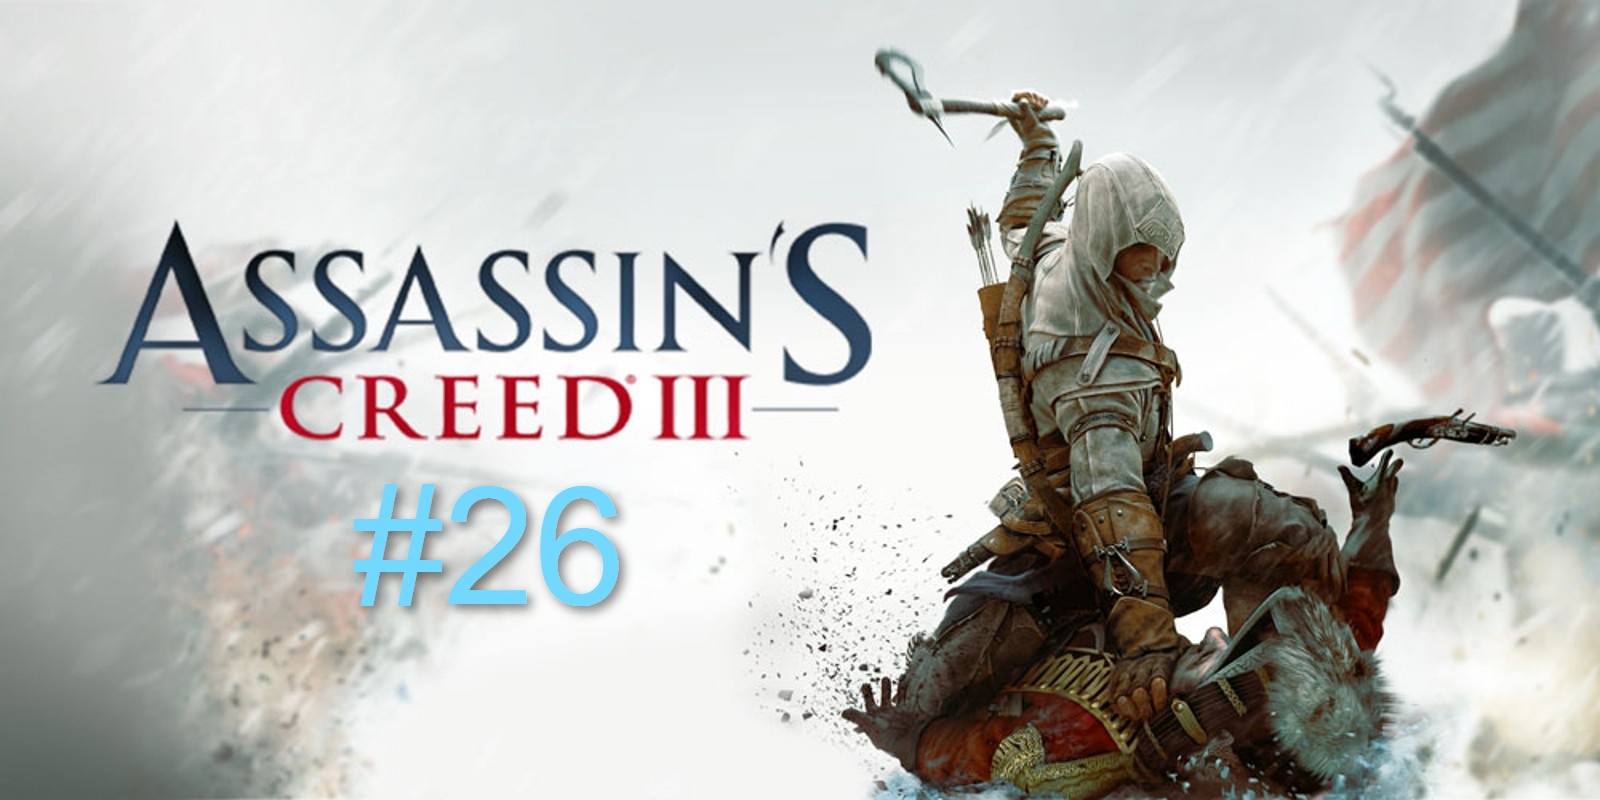 Assassin’s Creed III #26 Морское сражение